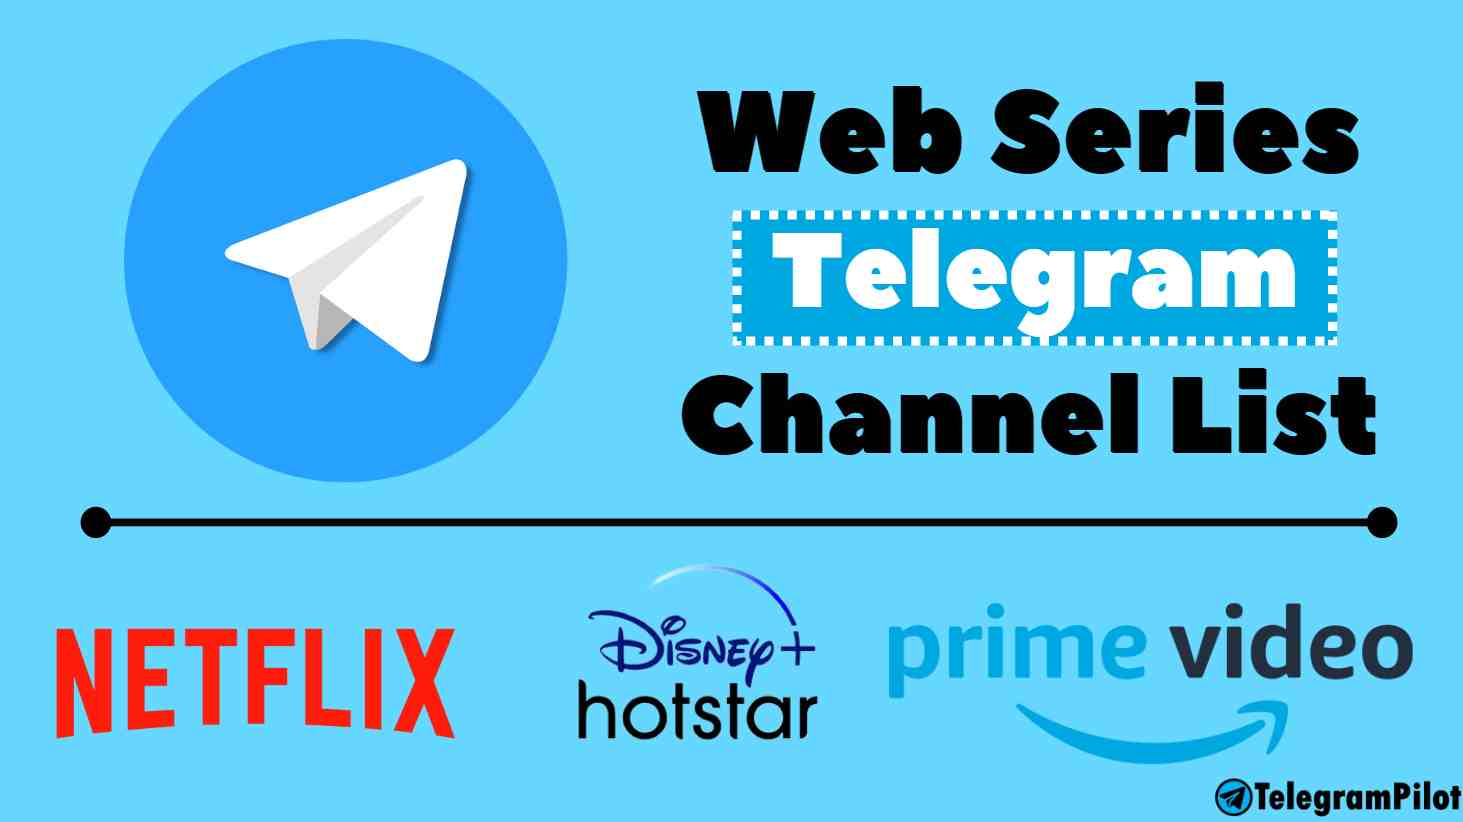 Telegram Web Series Channel List